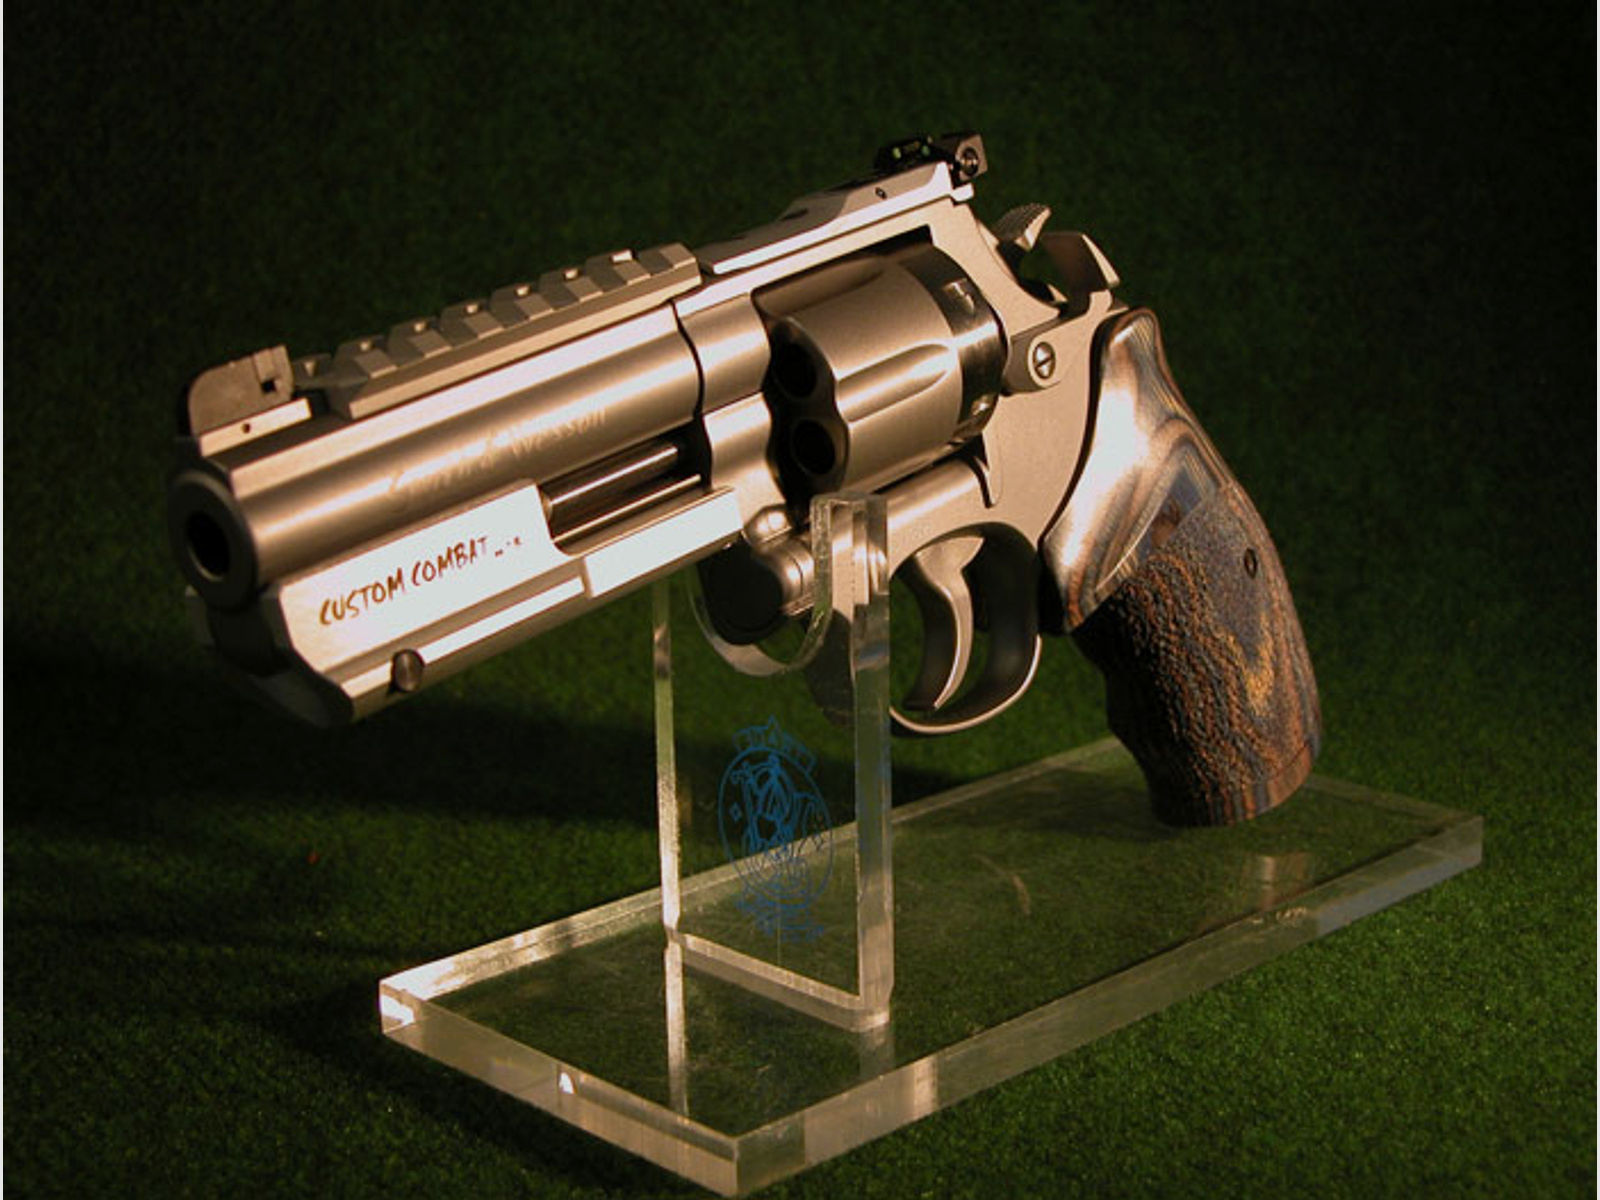 CUSTOM COMBAT SILVER S&W 686-5 4"Zoll 357 Magnum